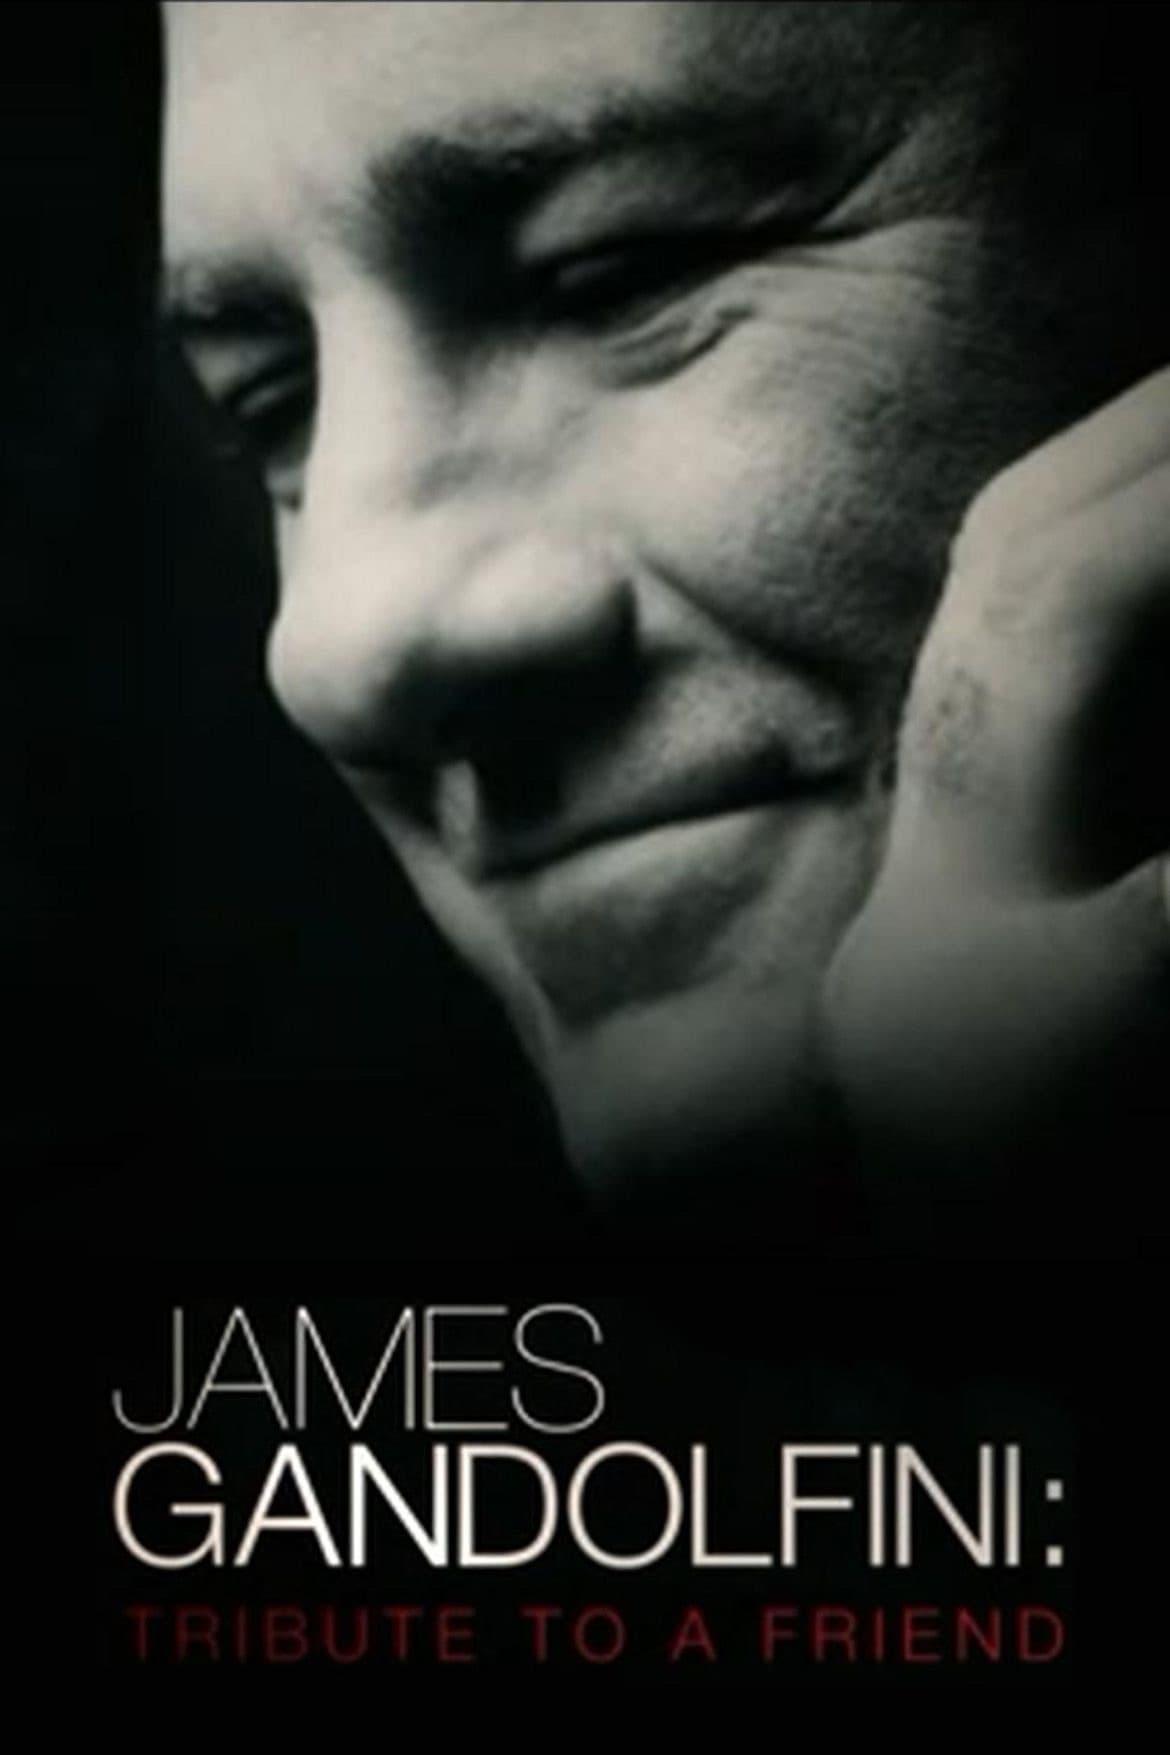 James Gandolfini: Tribute to a Friend poster